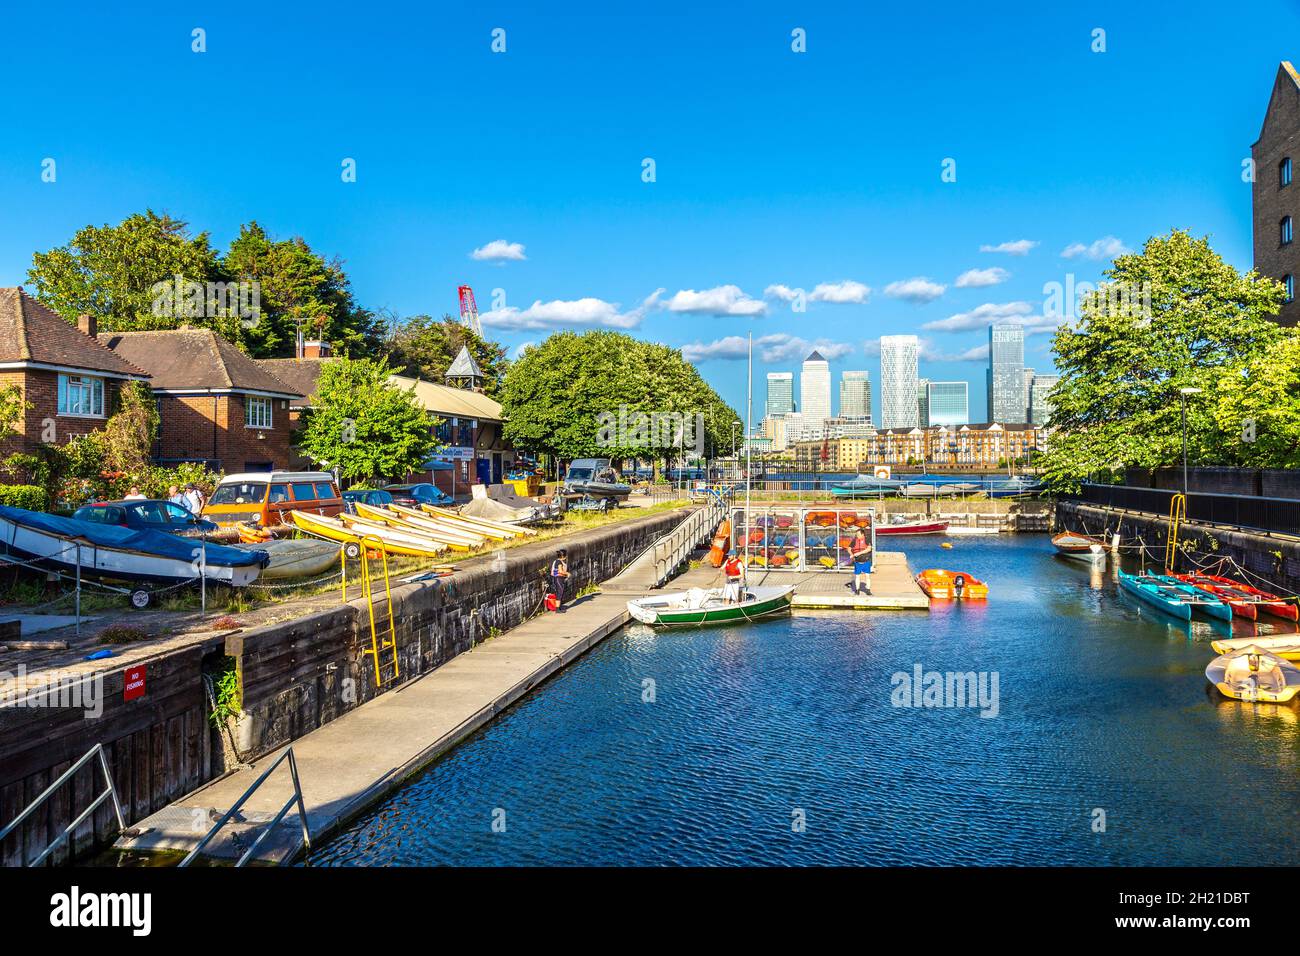 Shadwell Basin Outdoor Activity Center avec Canary Wharf en arrière-plan, Londres, Royaume-Uni Banque D'Images